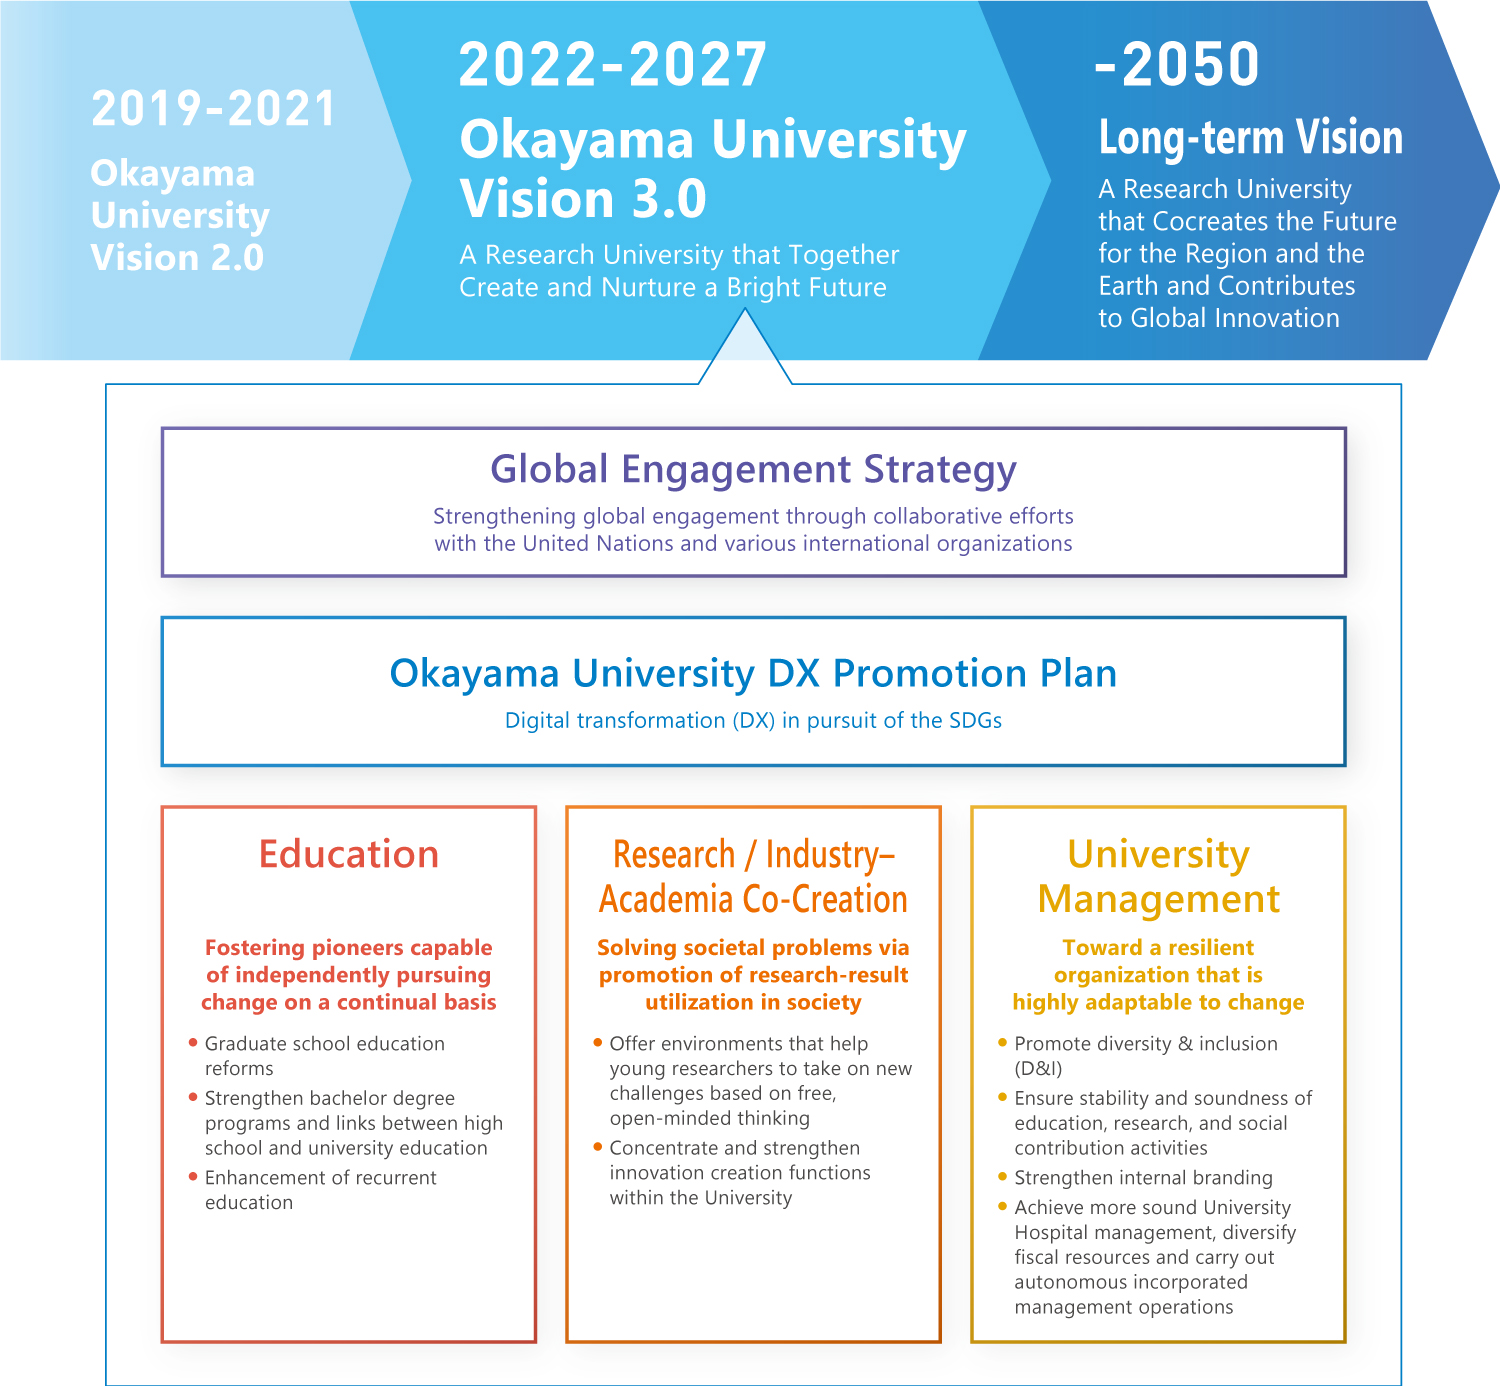 Okayama University Vision 3.0 and Okayama University Long-term Vision 2050